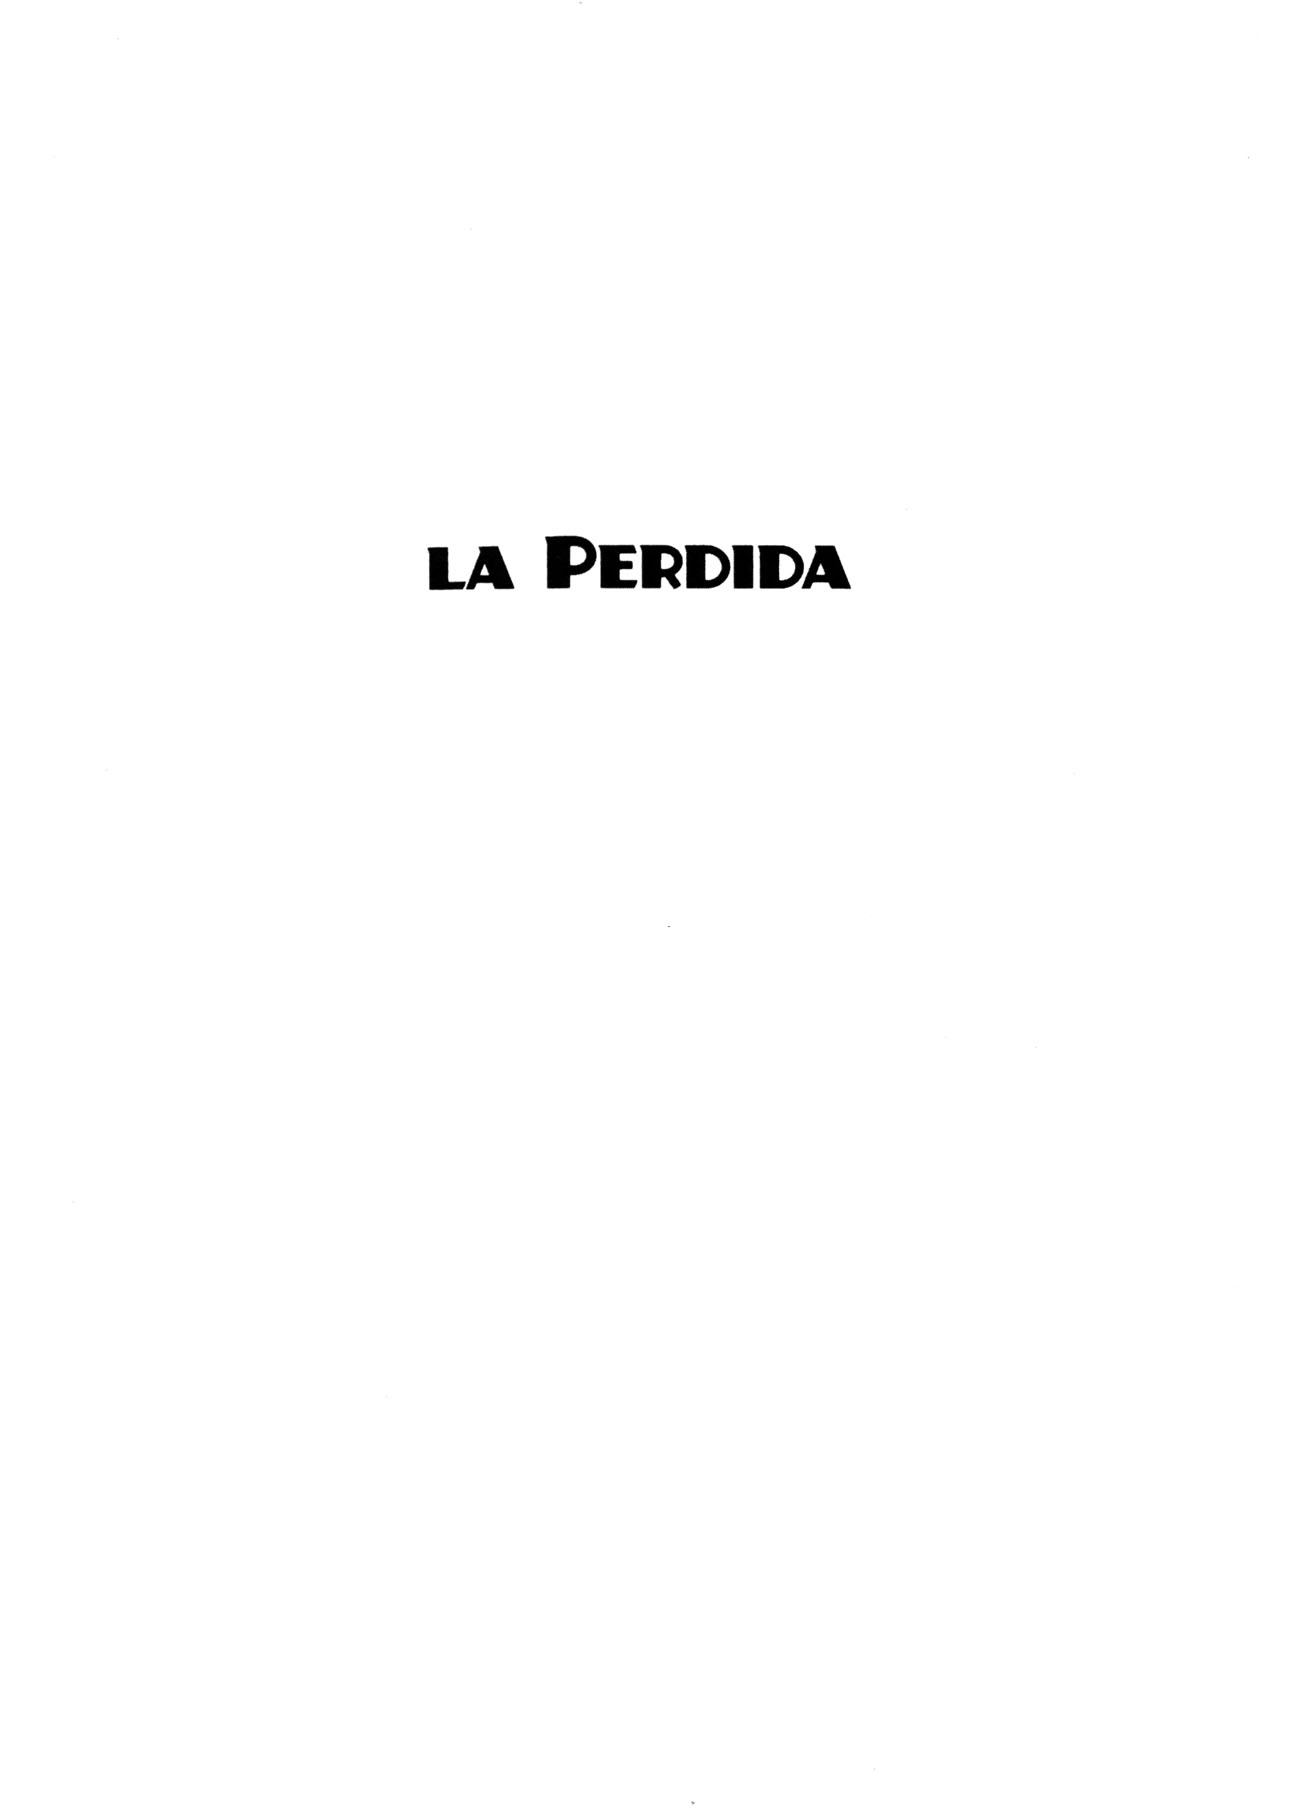 Read online La Perdida comic -  Issue # TPB - 10